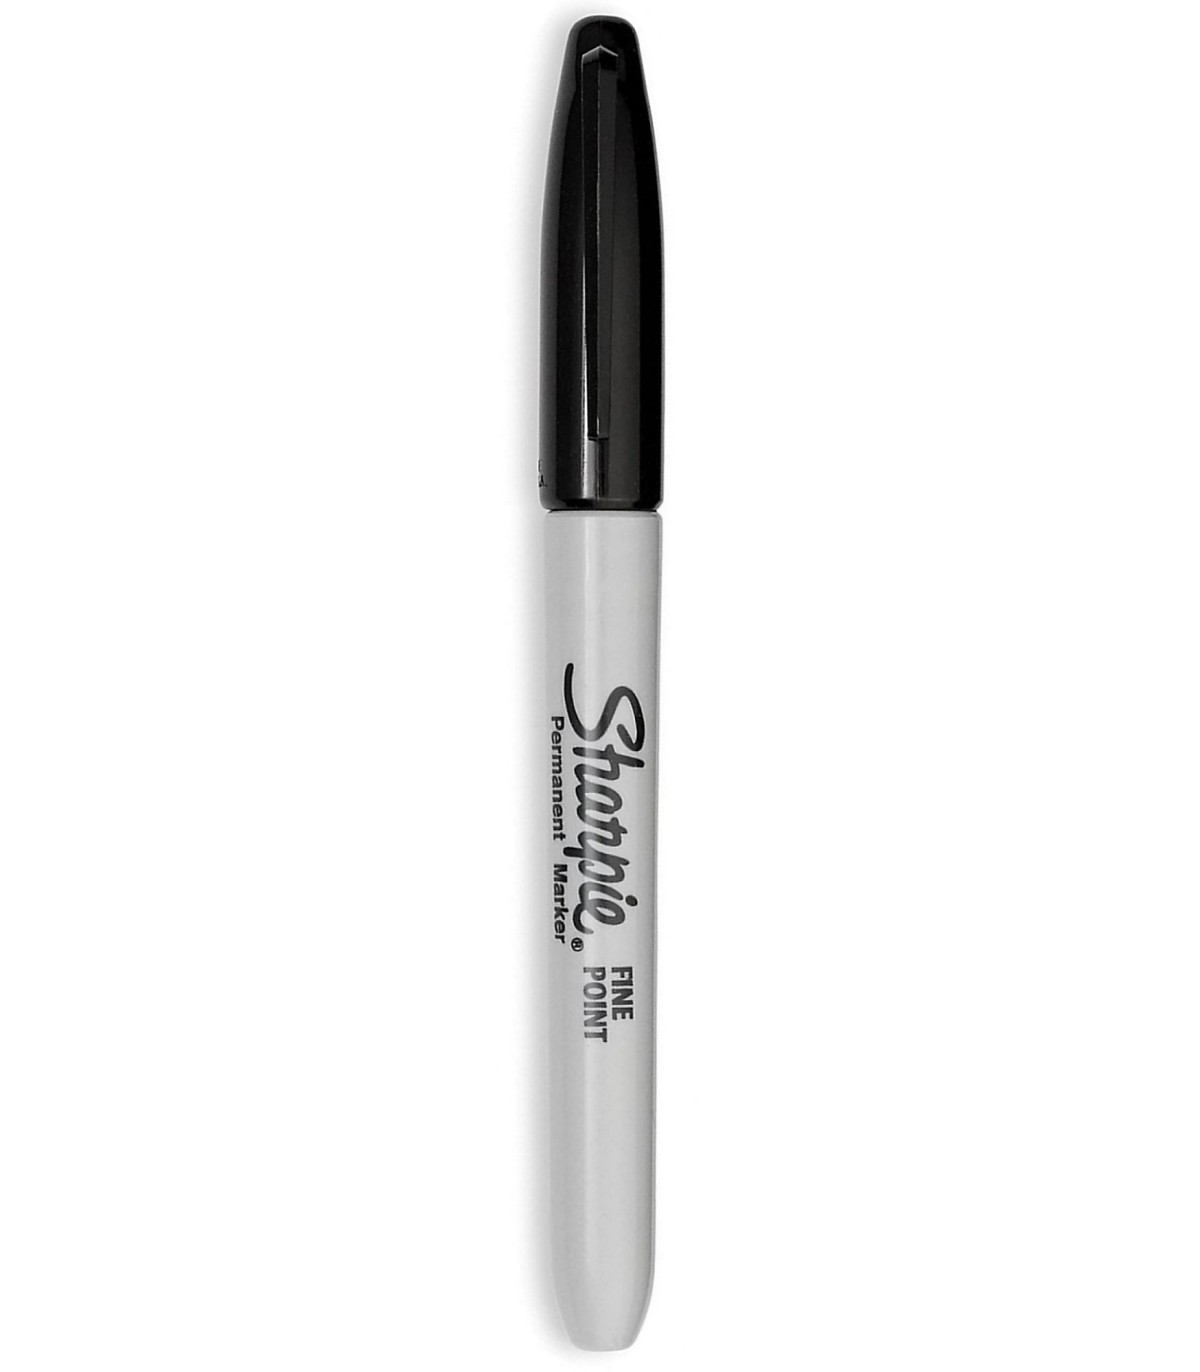 Sharpie Permanent Marker Pens, Sharpie Marker Pen Black